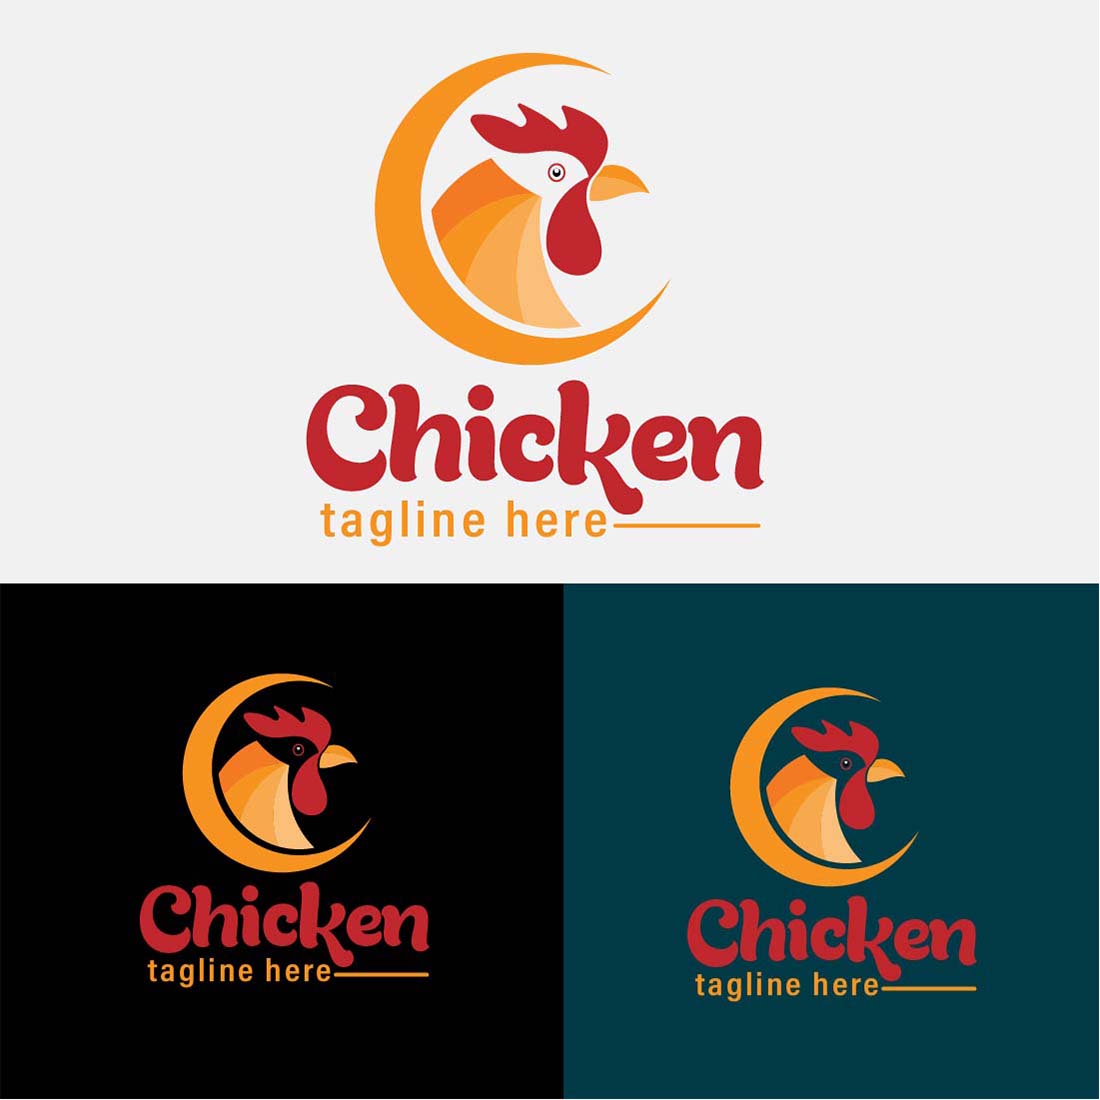 Chicken Restaurant Logo Design Template cover image.